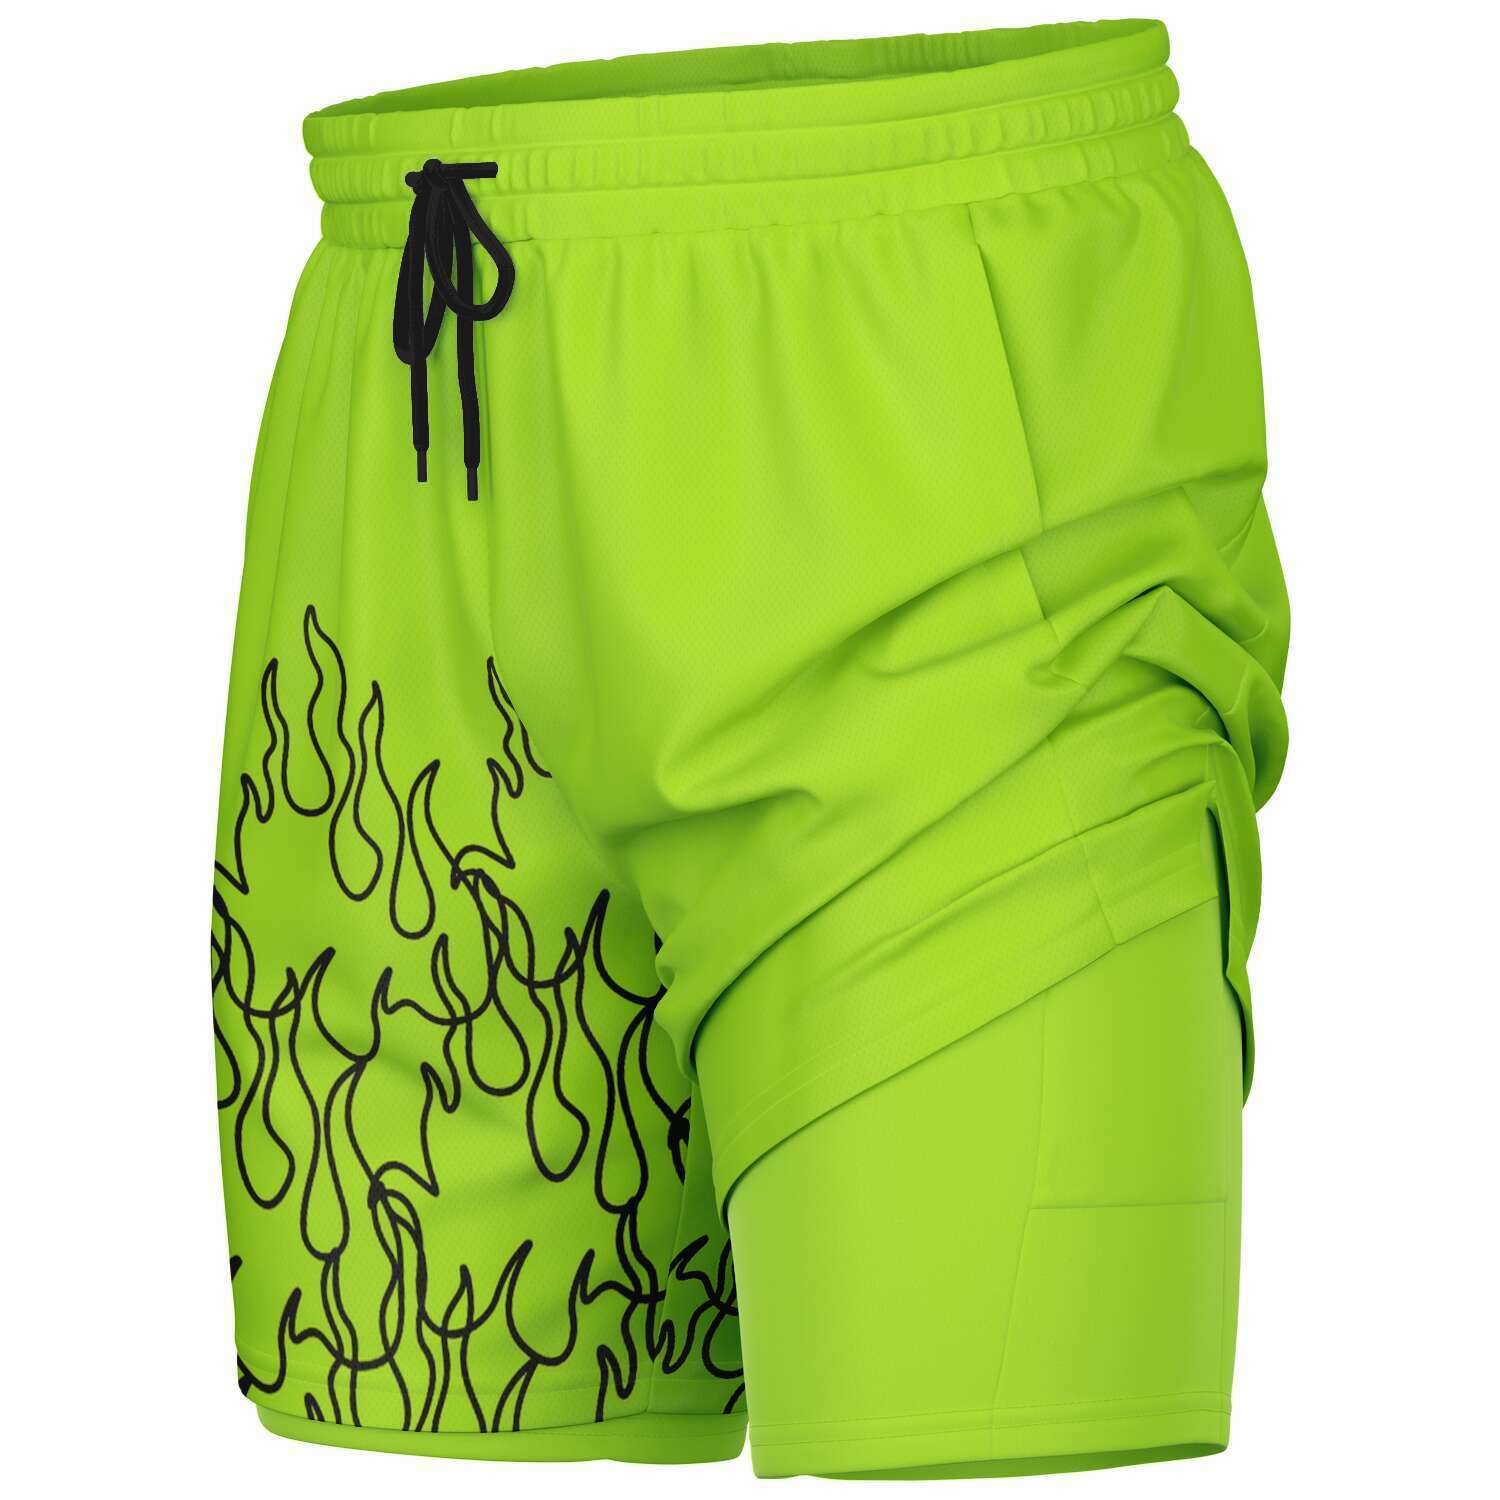 Green Black Pinstripe Shorts